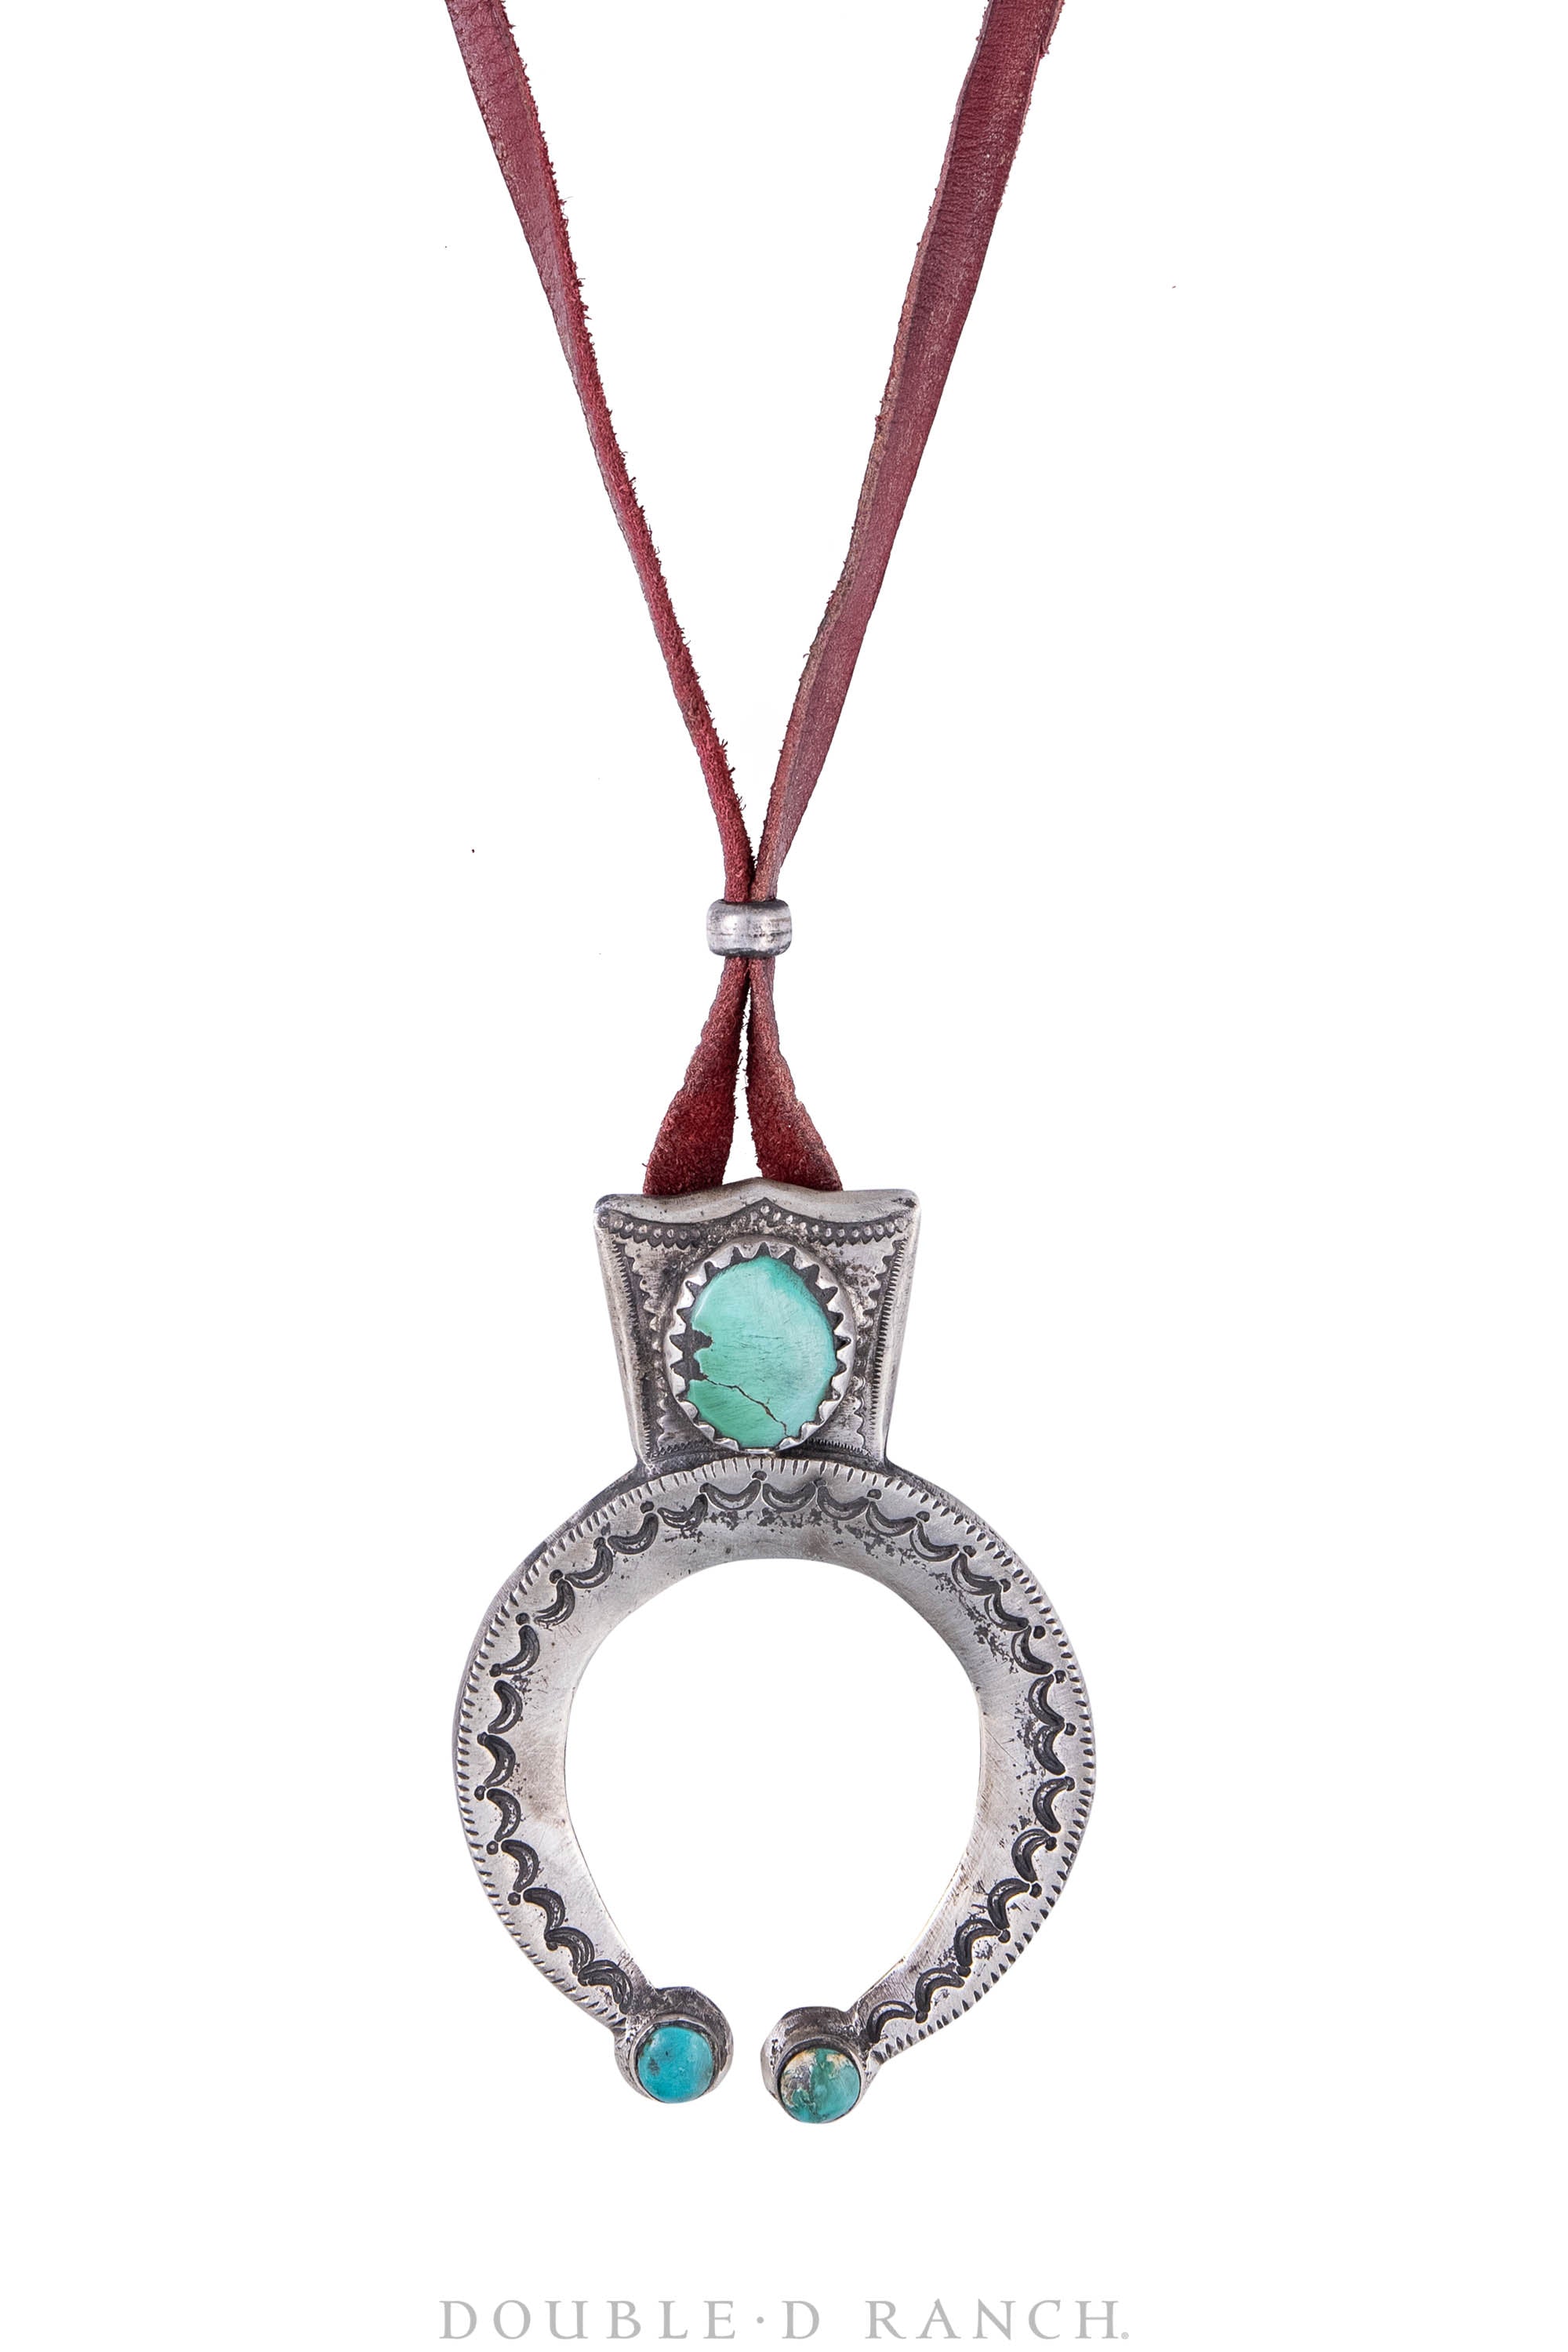 Necklace, Leather Thong, Nana, Turquoise, Jock Favour, Hallmark, Artisan, Contemporary, 1293